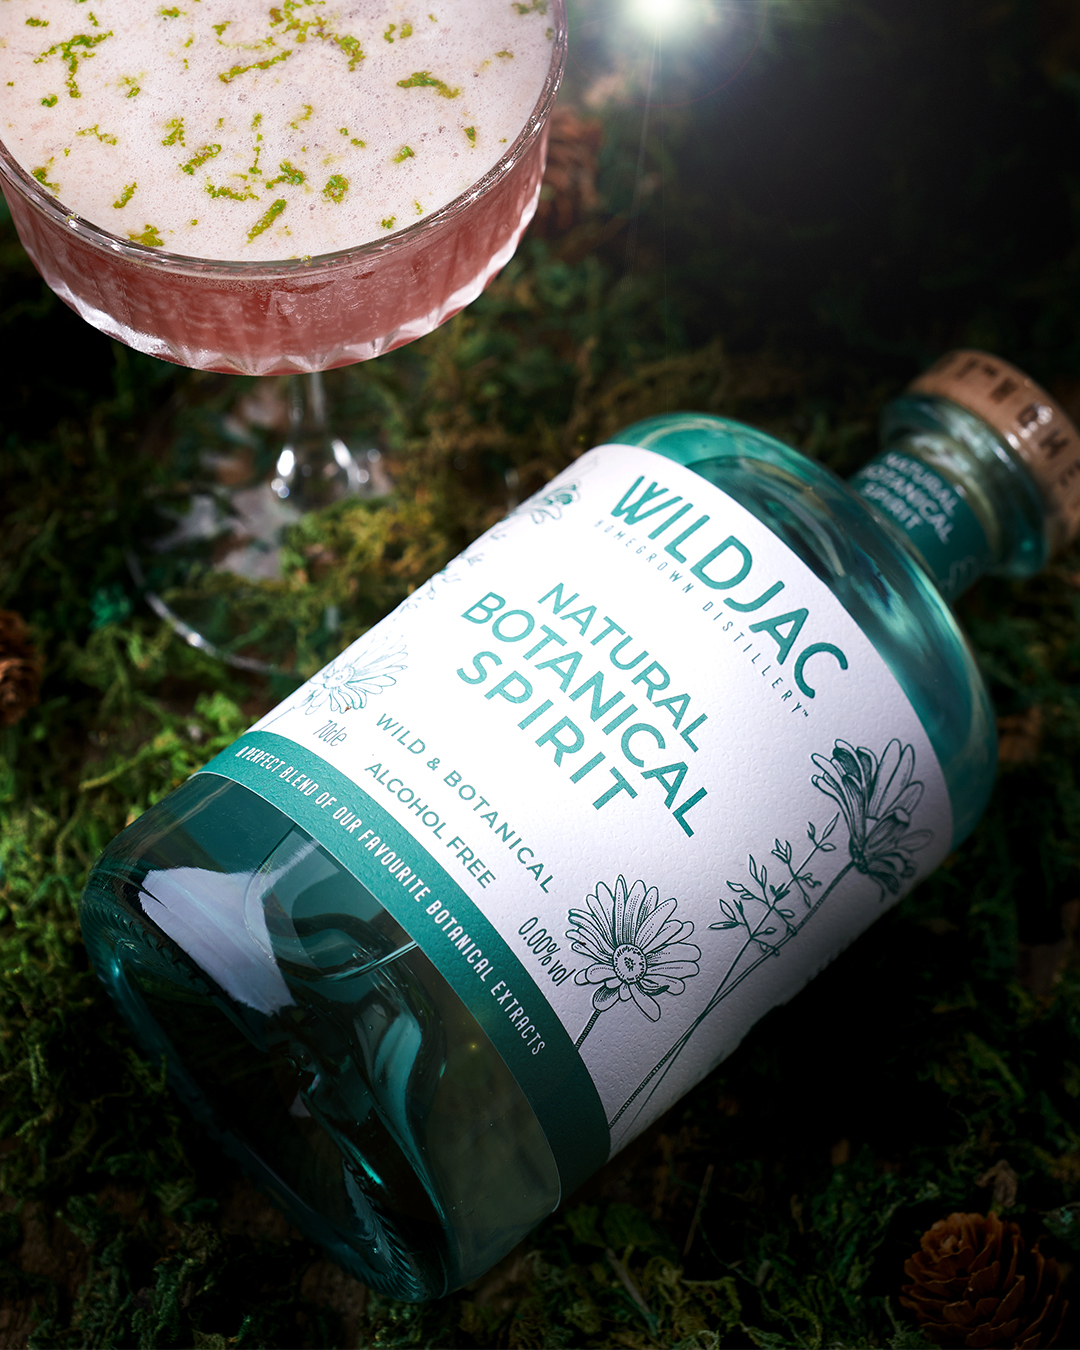 Natural Botanical Spirits - Alcohol-free 70cl - WildJac